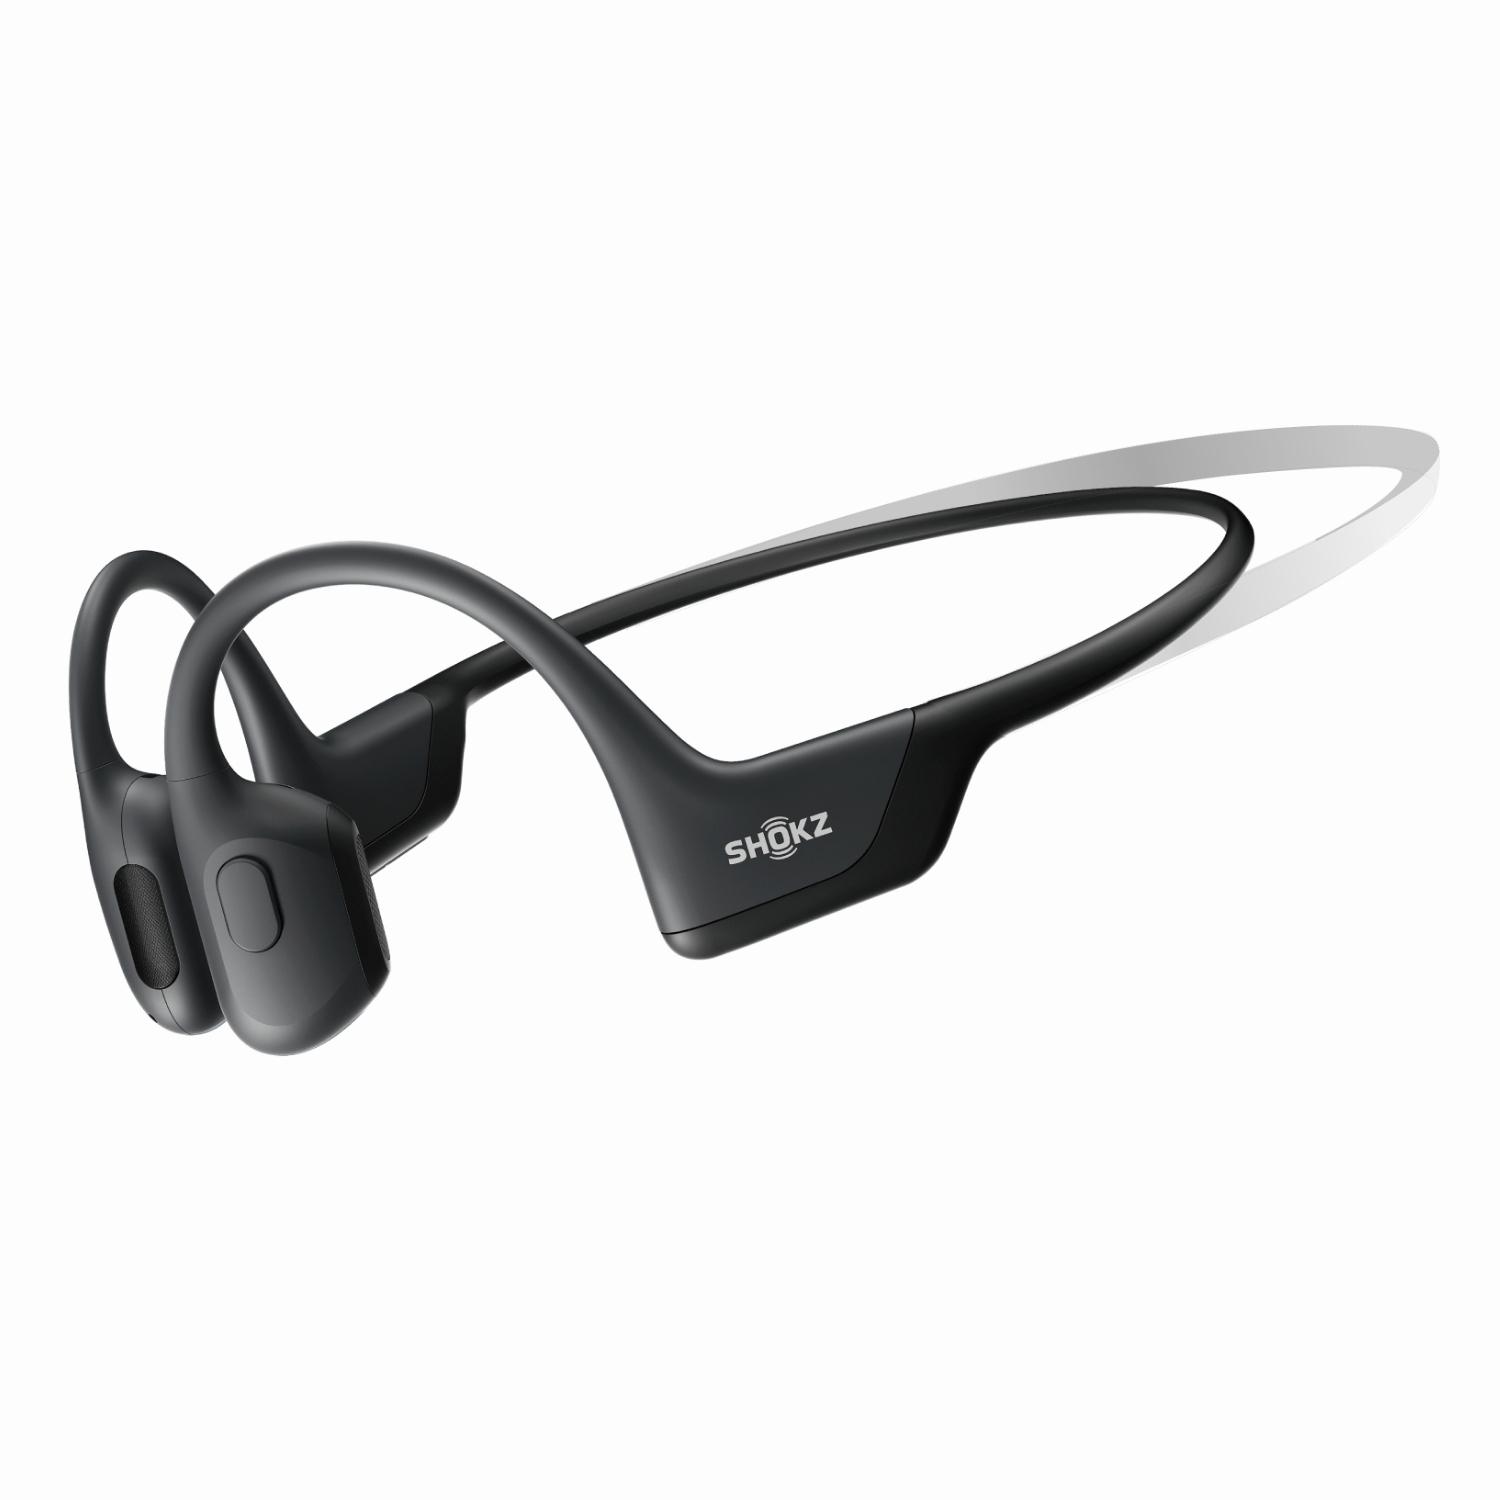 OpenRun Pro Mini, Schwarz SHOKZ Bluetooth Open-ear Kopfhörer